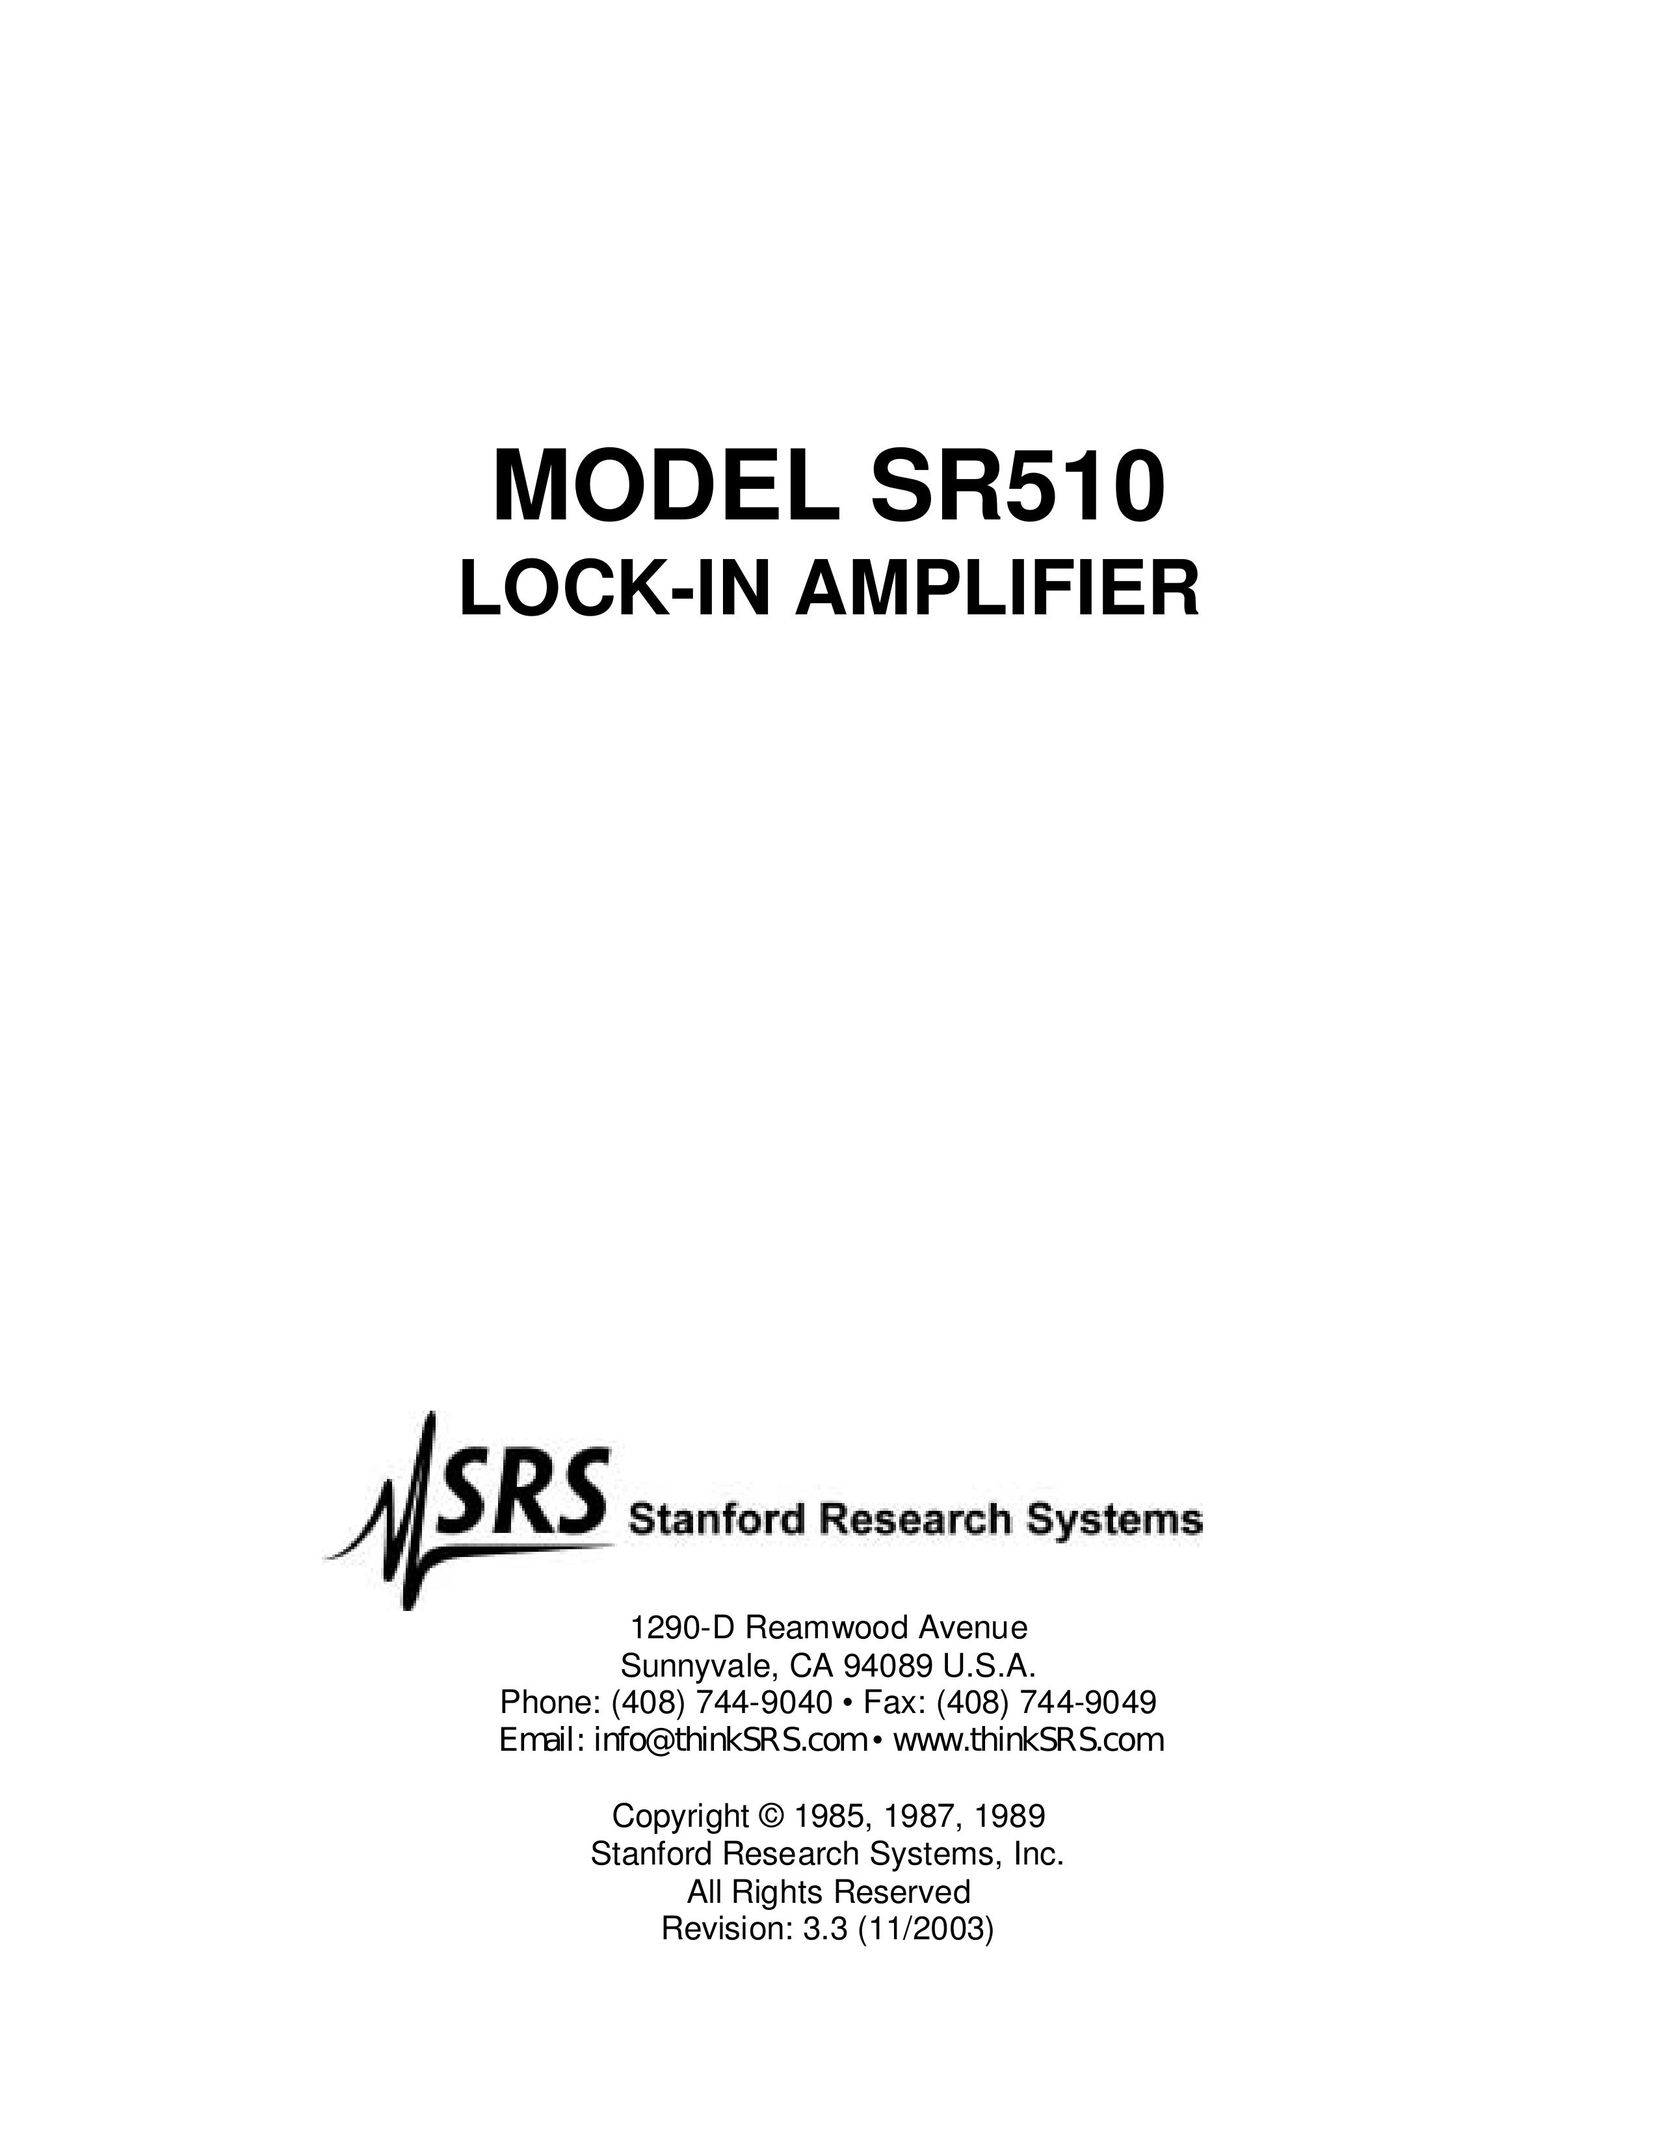 SRS Labs SR510 Stereo Amplifier User Manual